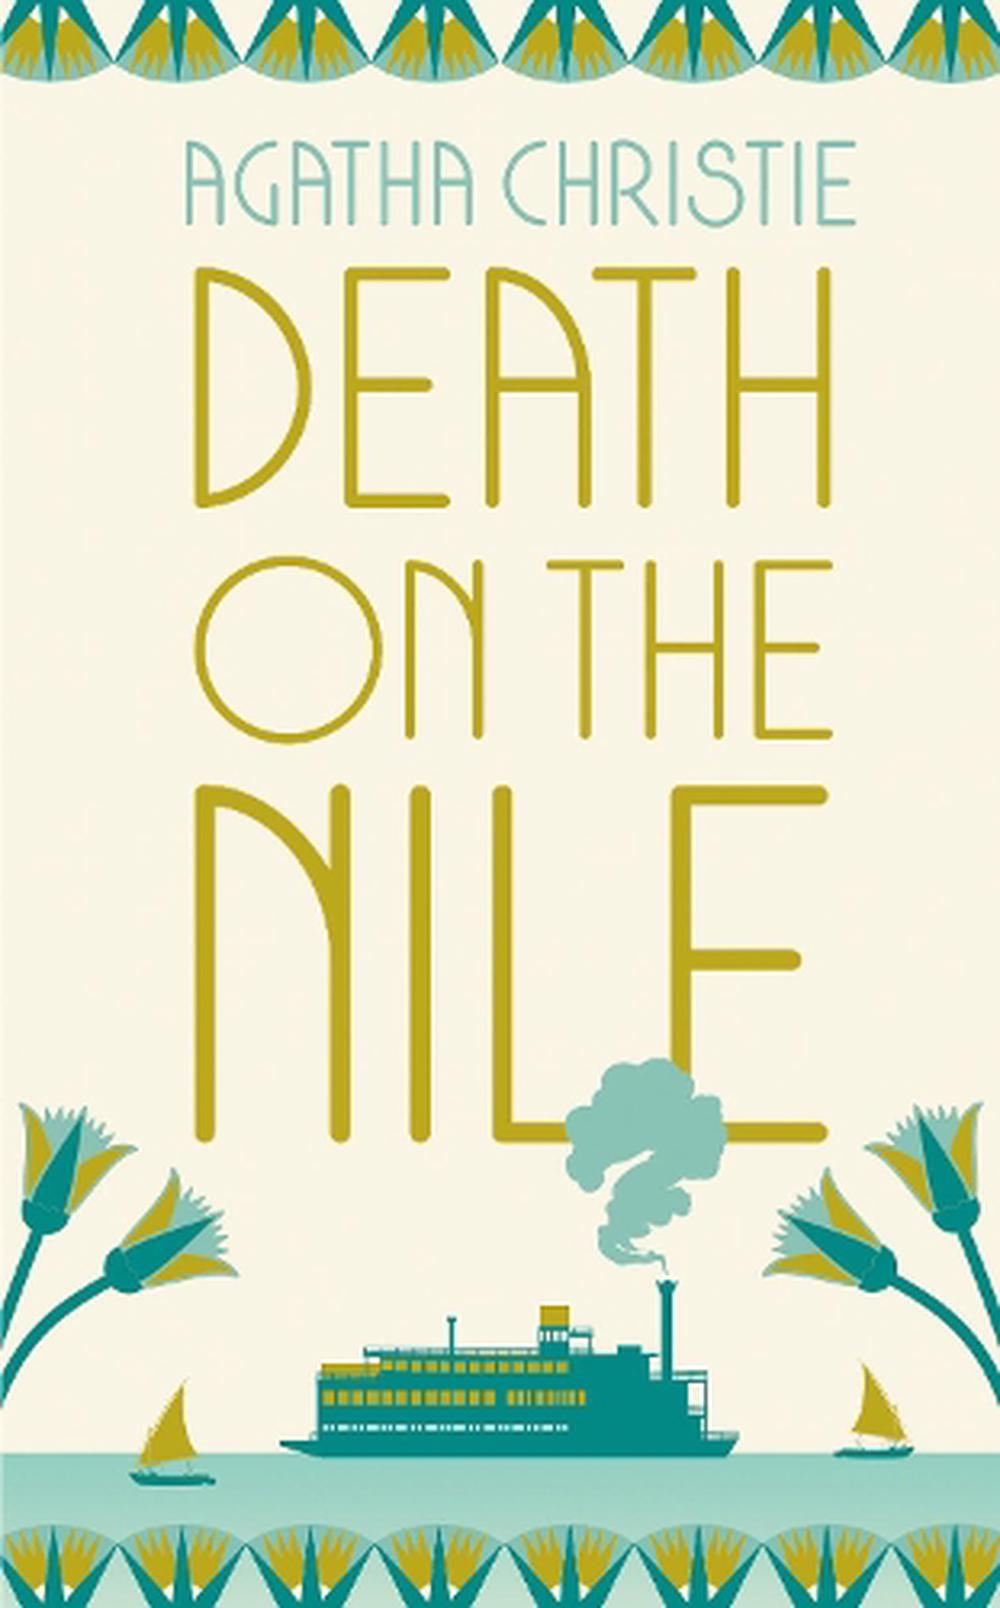 death on nile book